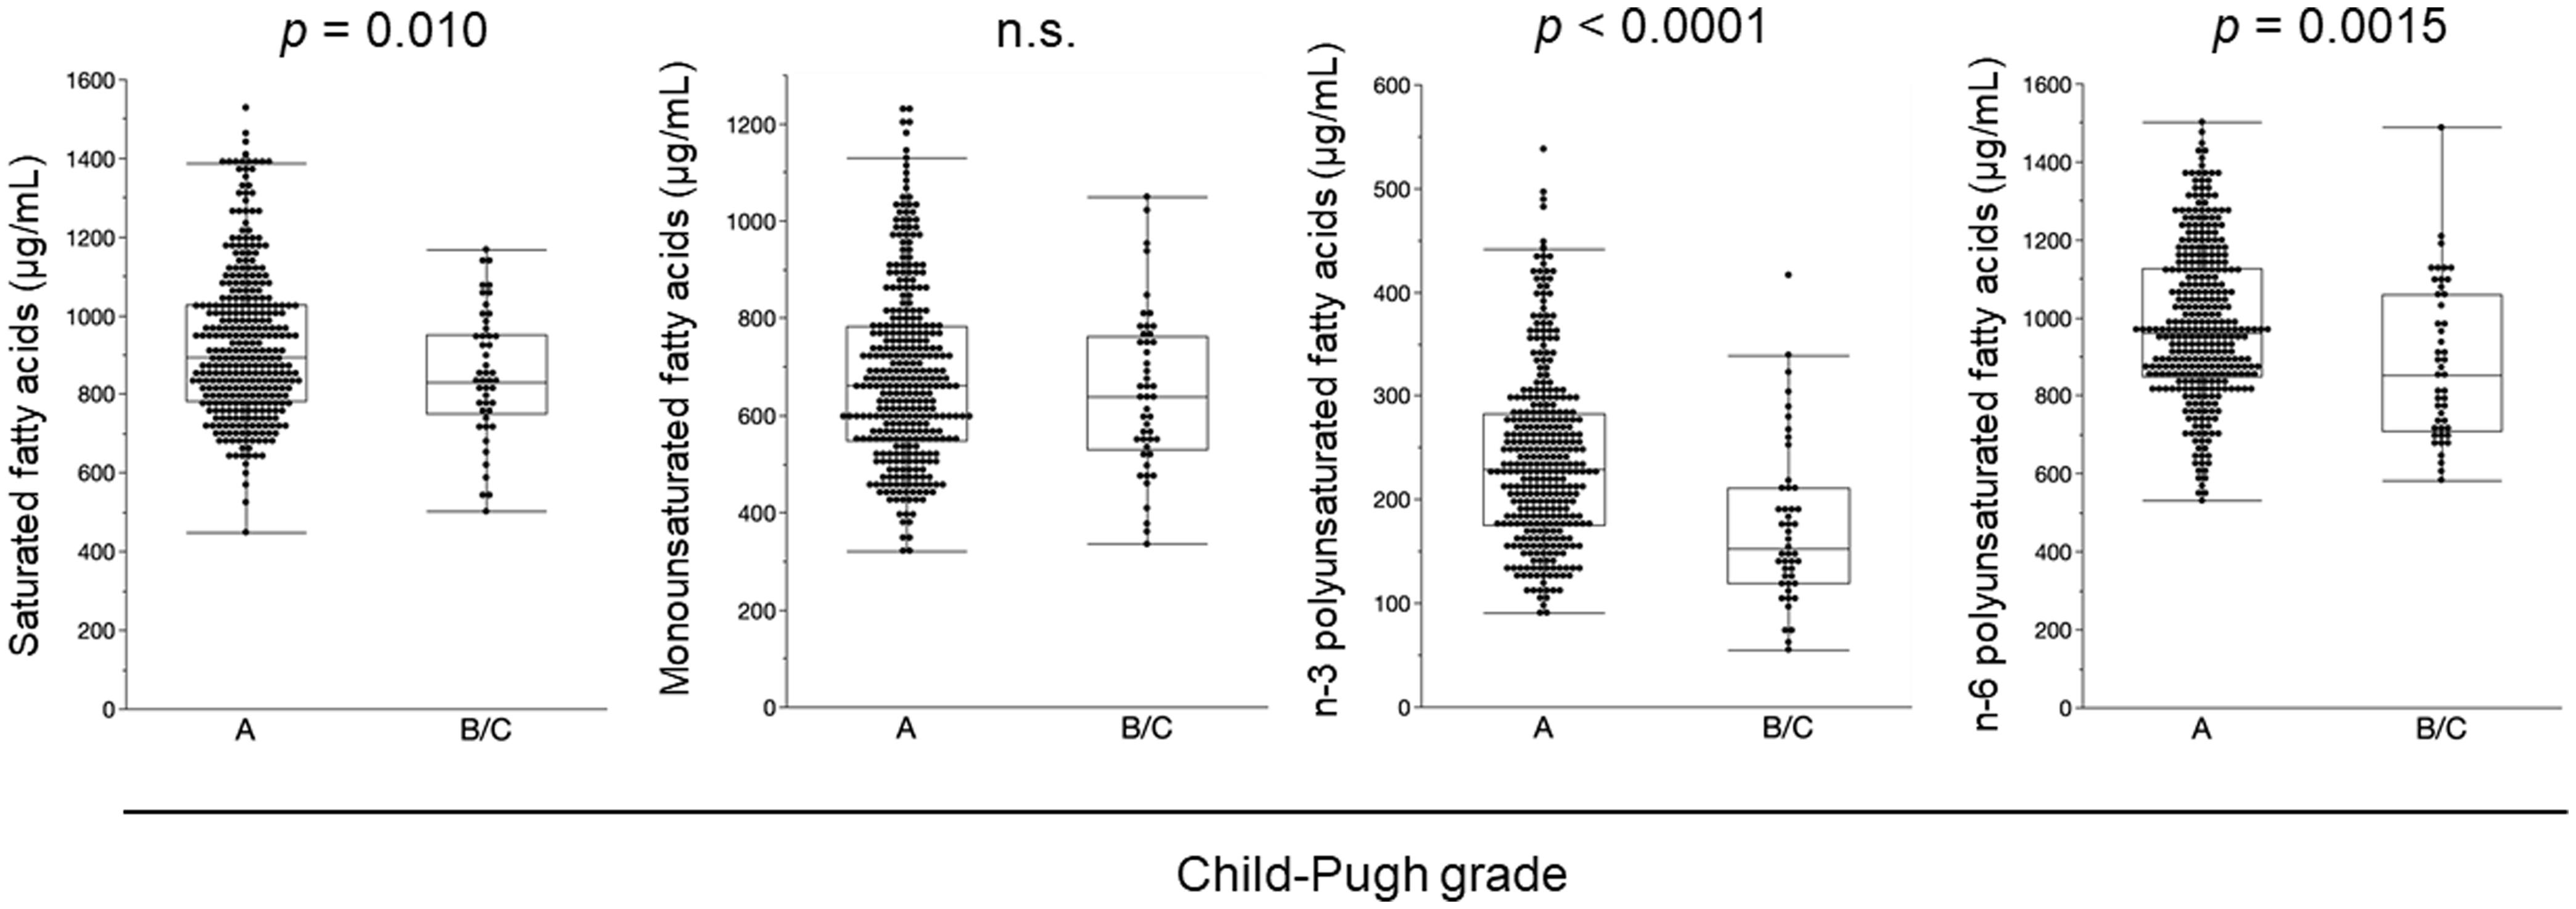 Comparison of plasma fatty acid profiles in liver cirrhosis and hepatocellular carcinoma patients according to Child-Pugh grade.